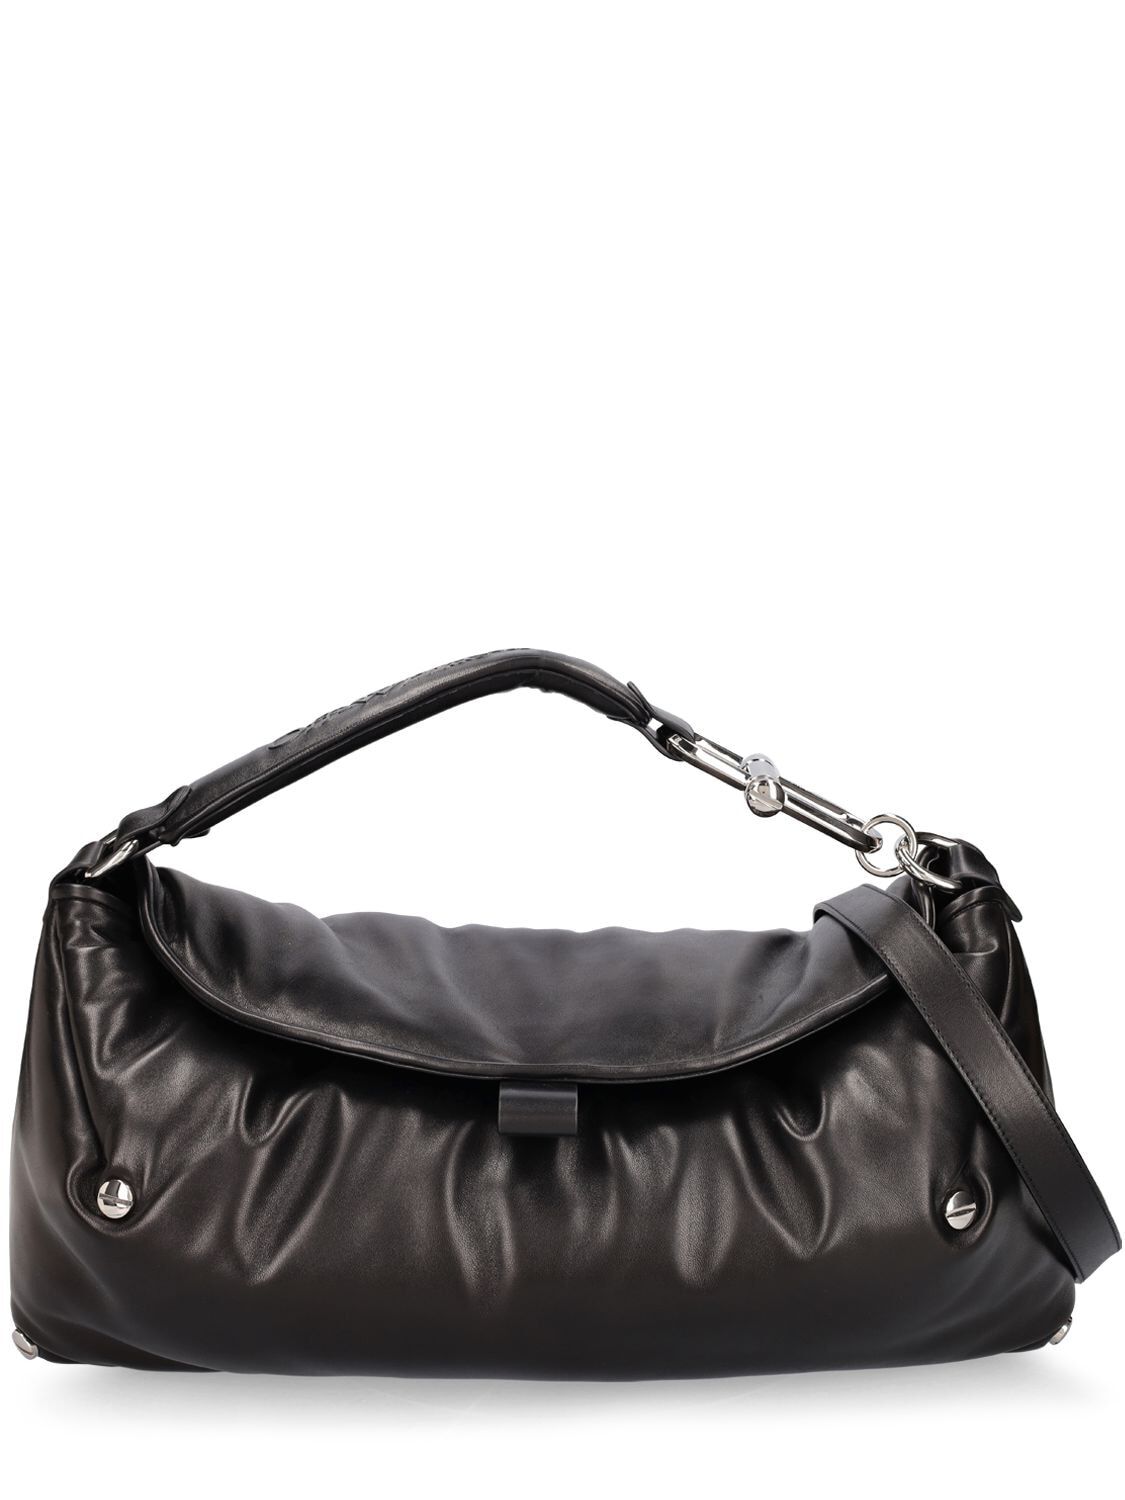 OFF-WHITE Medium San Diego Shoulder Bag in black